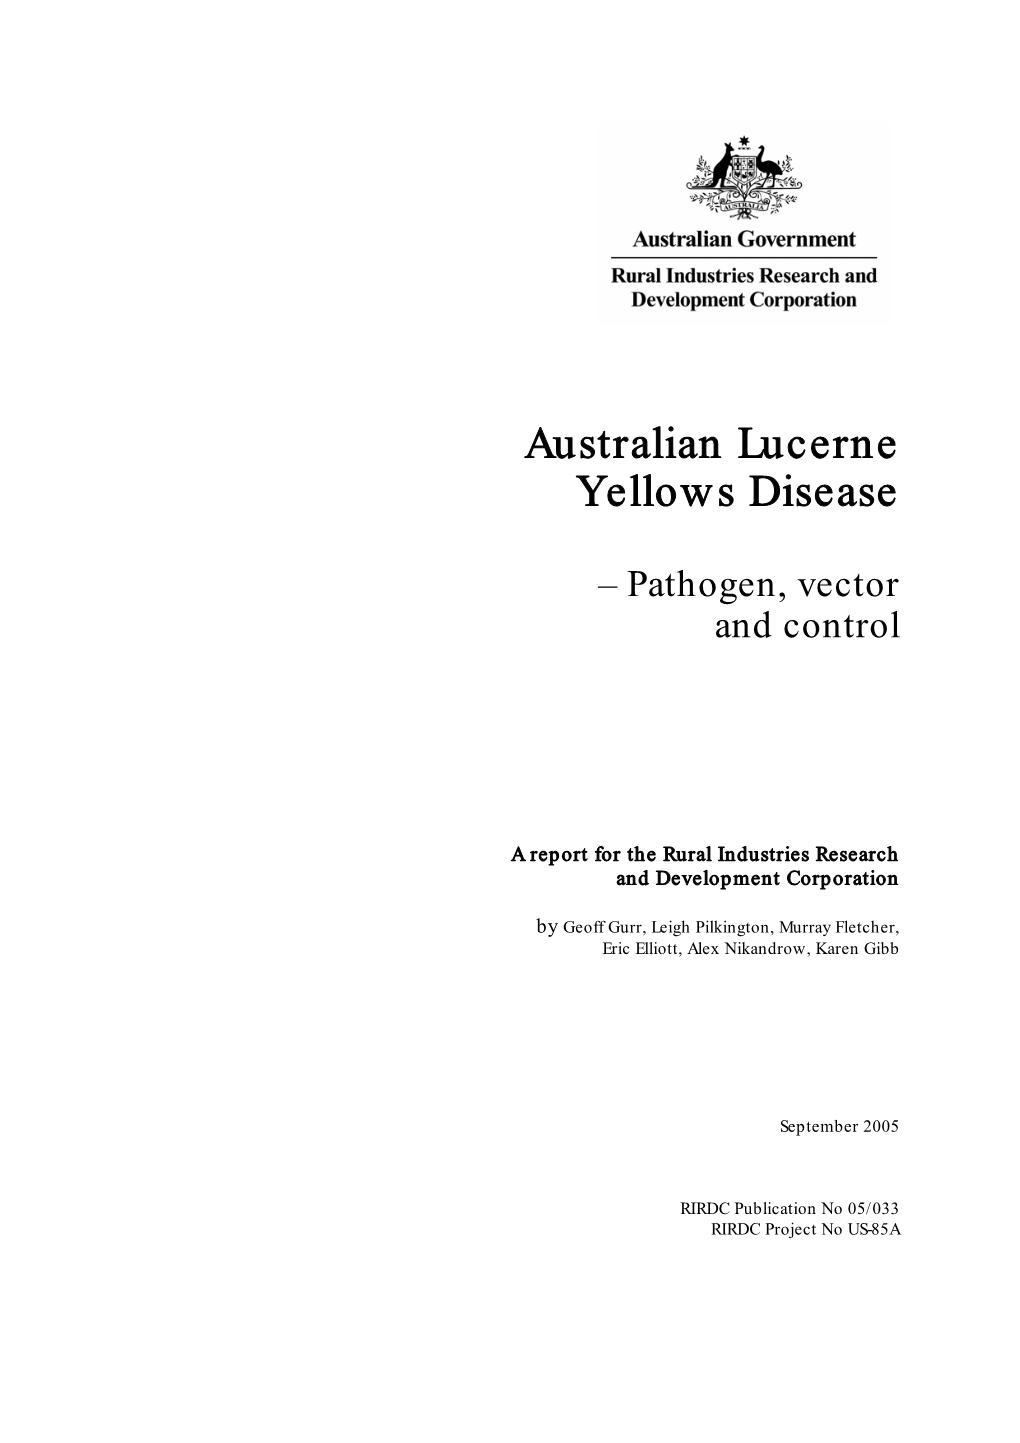 Australian Lucerne Yellows Disease